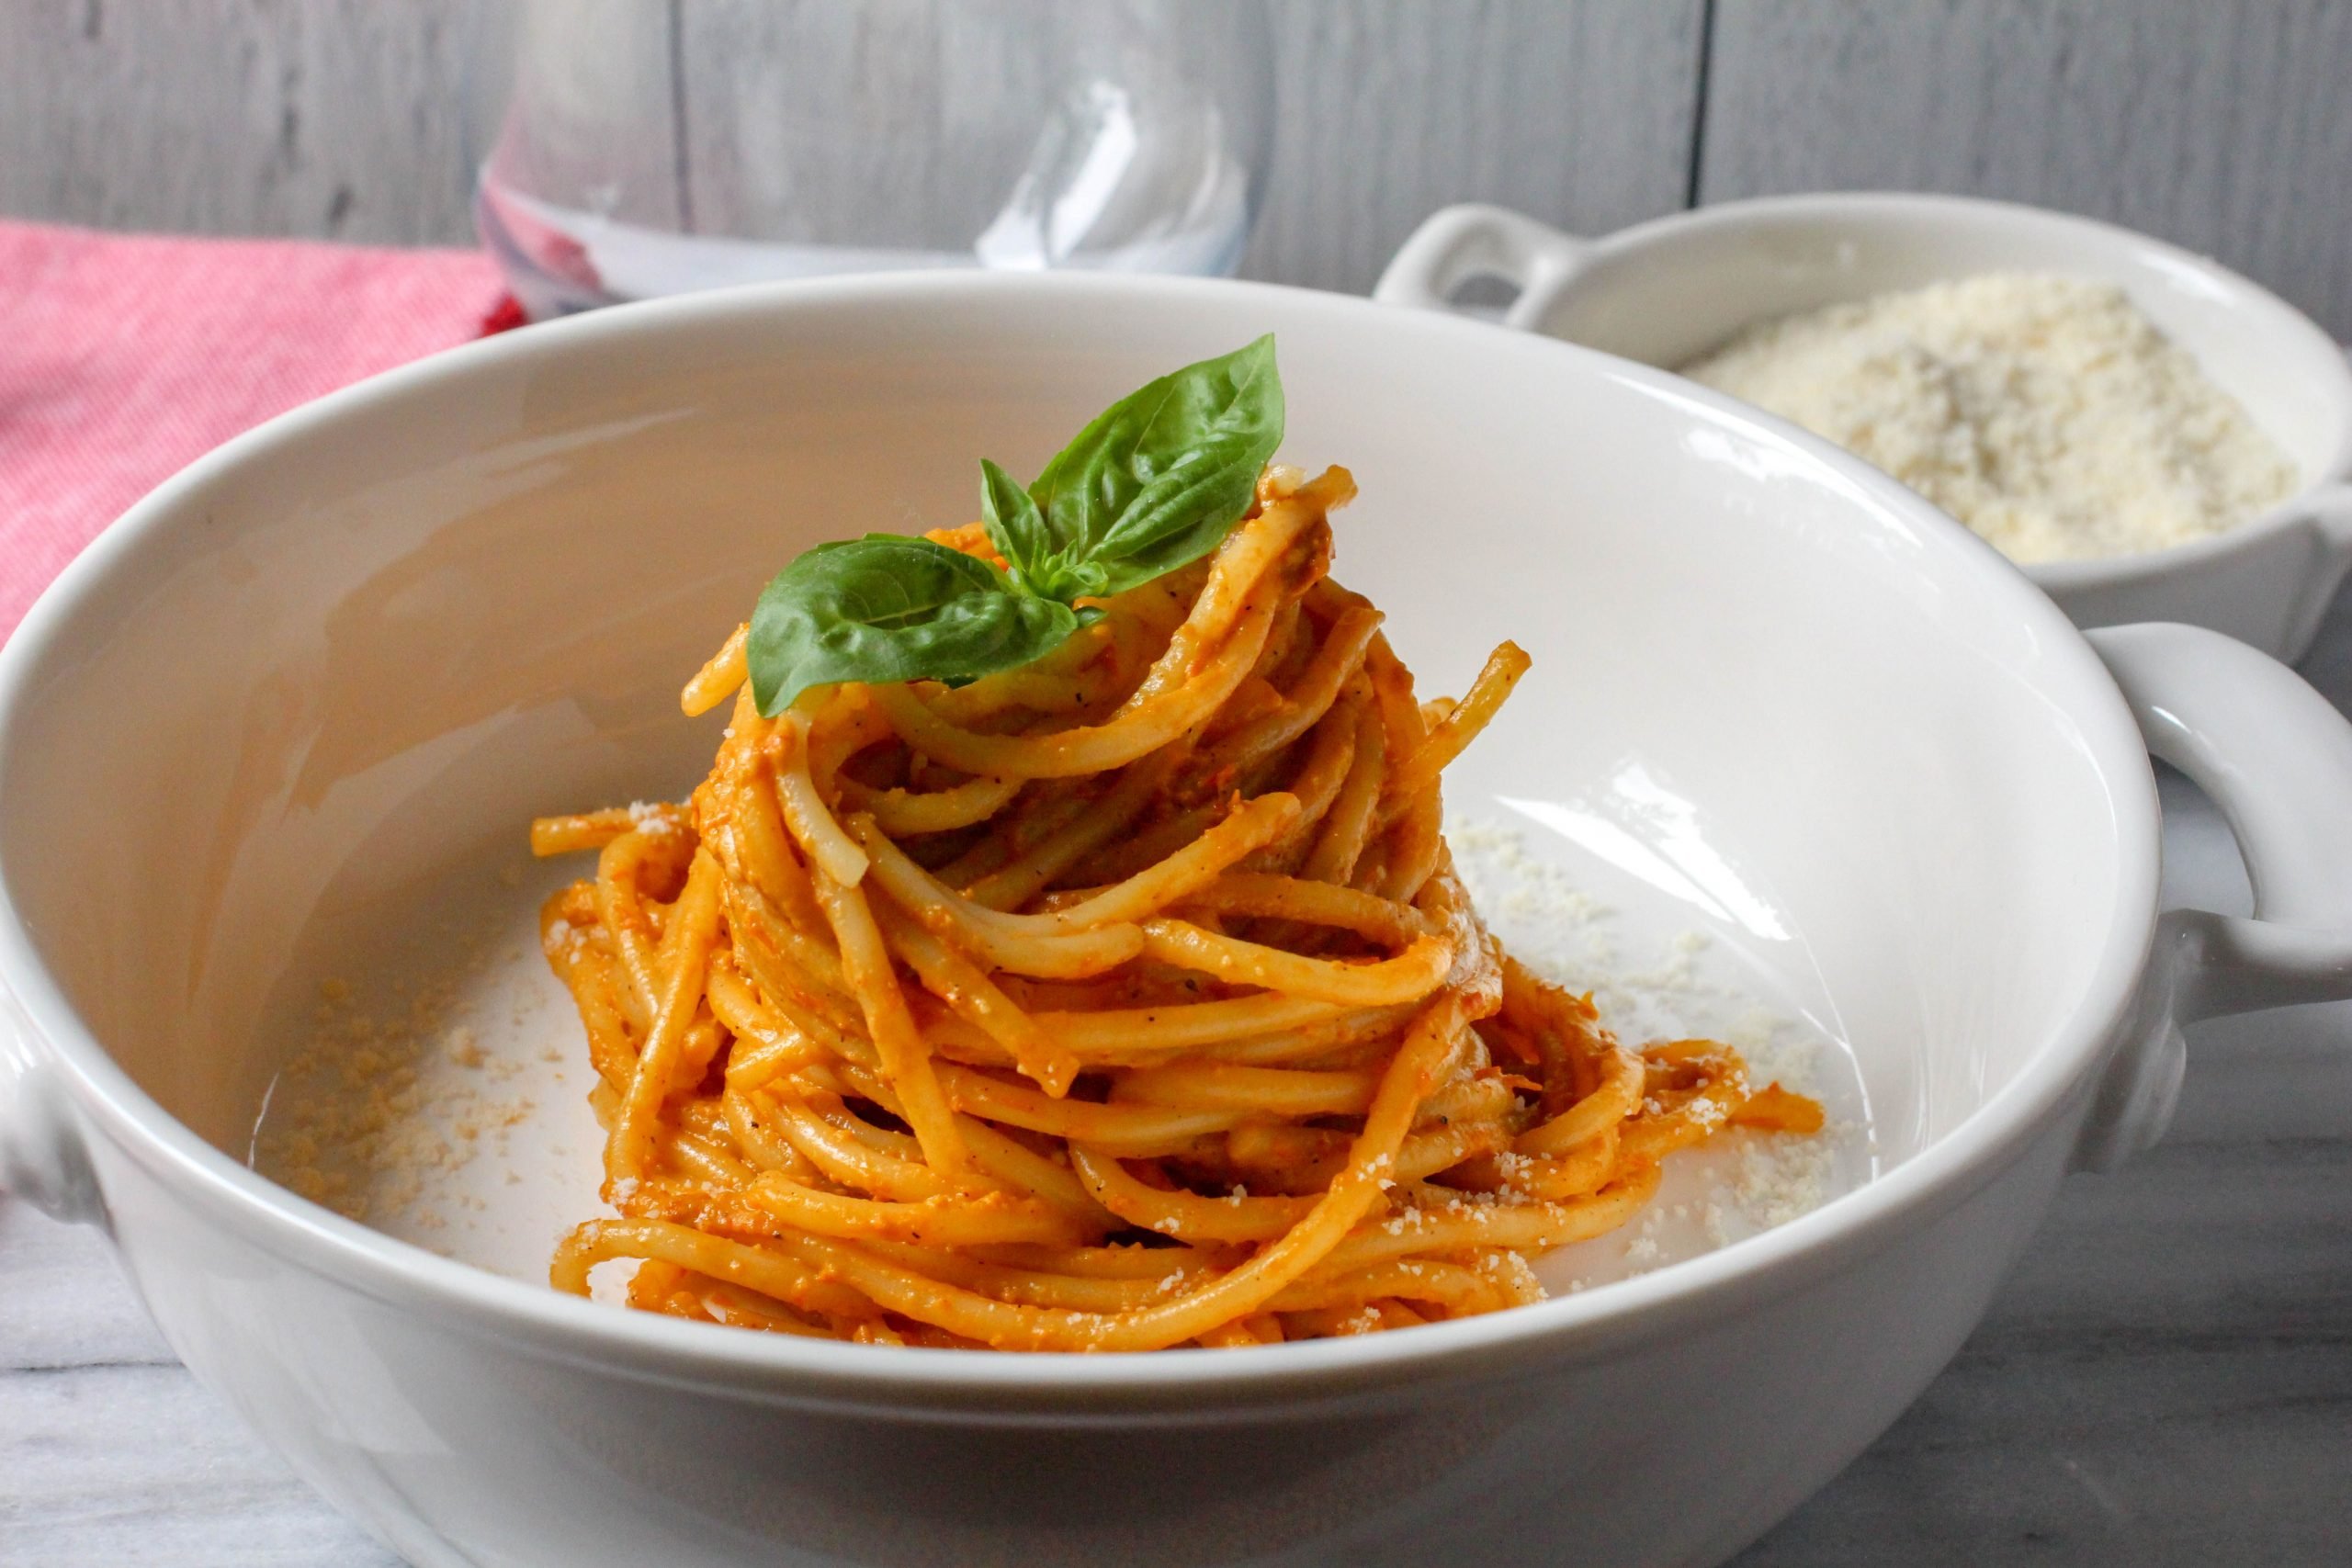 How To Make Spaghetti Sauce Wjrh Tomato Paste / 10 Best ...